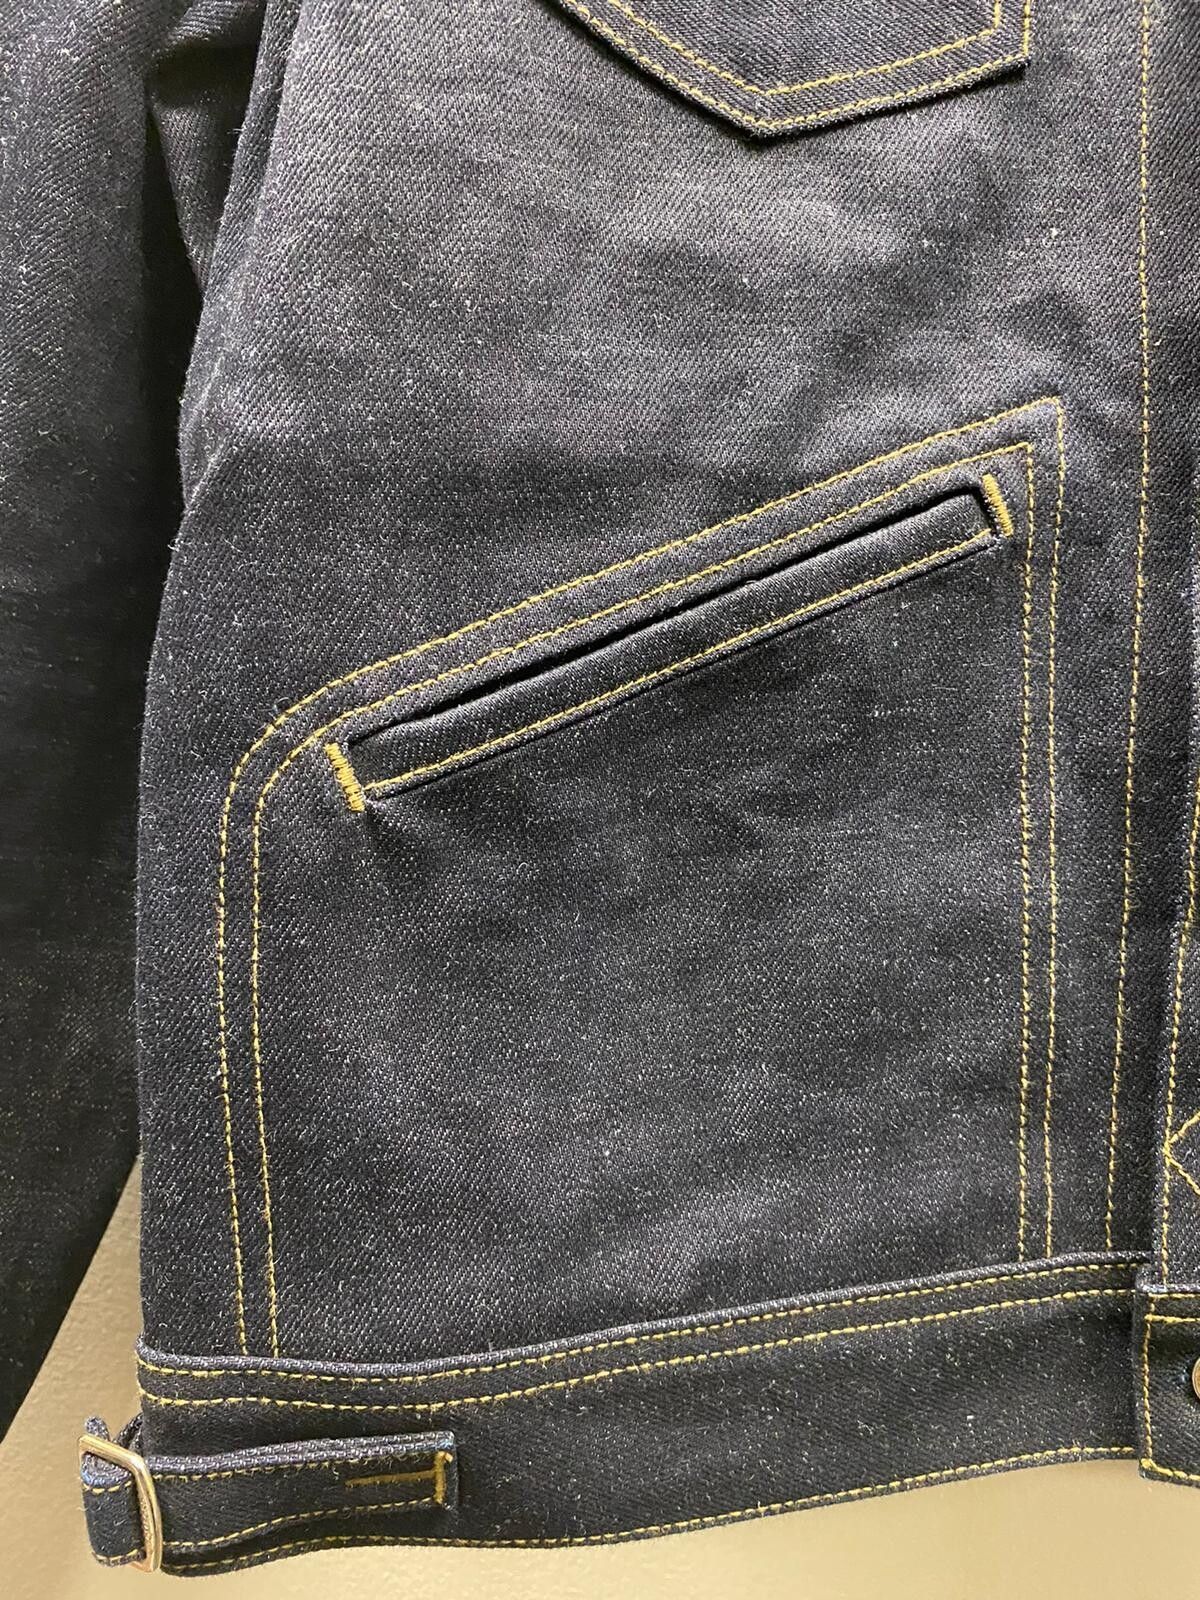 Tom Ford Classic Denim Jacket in Indigo Size US M / EU 48-50 / 2 - 10 Thumbnail